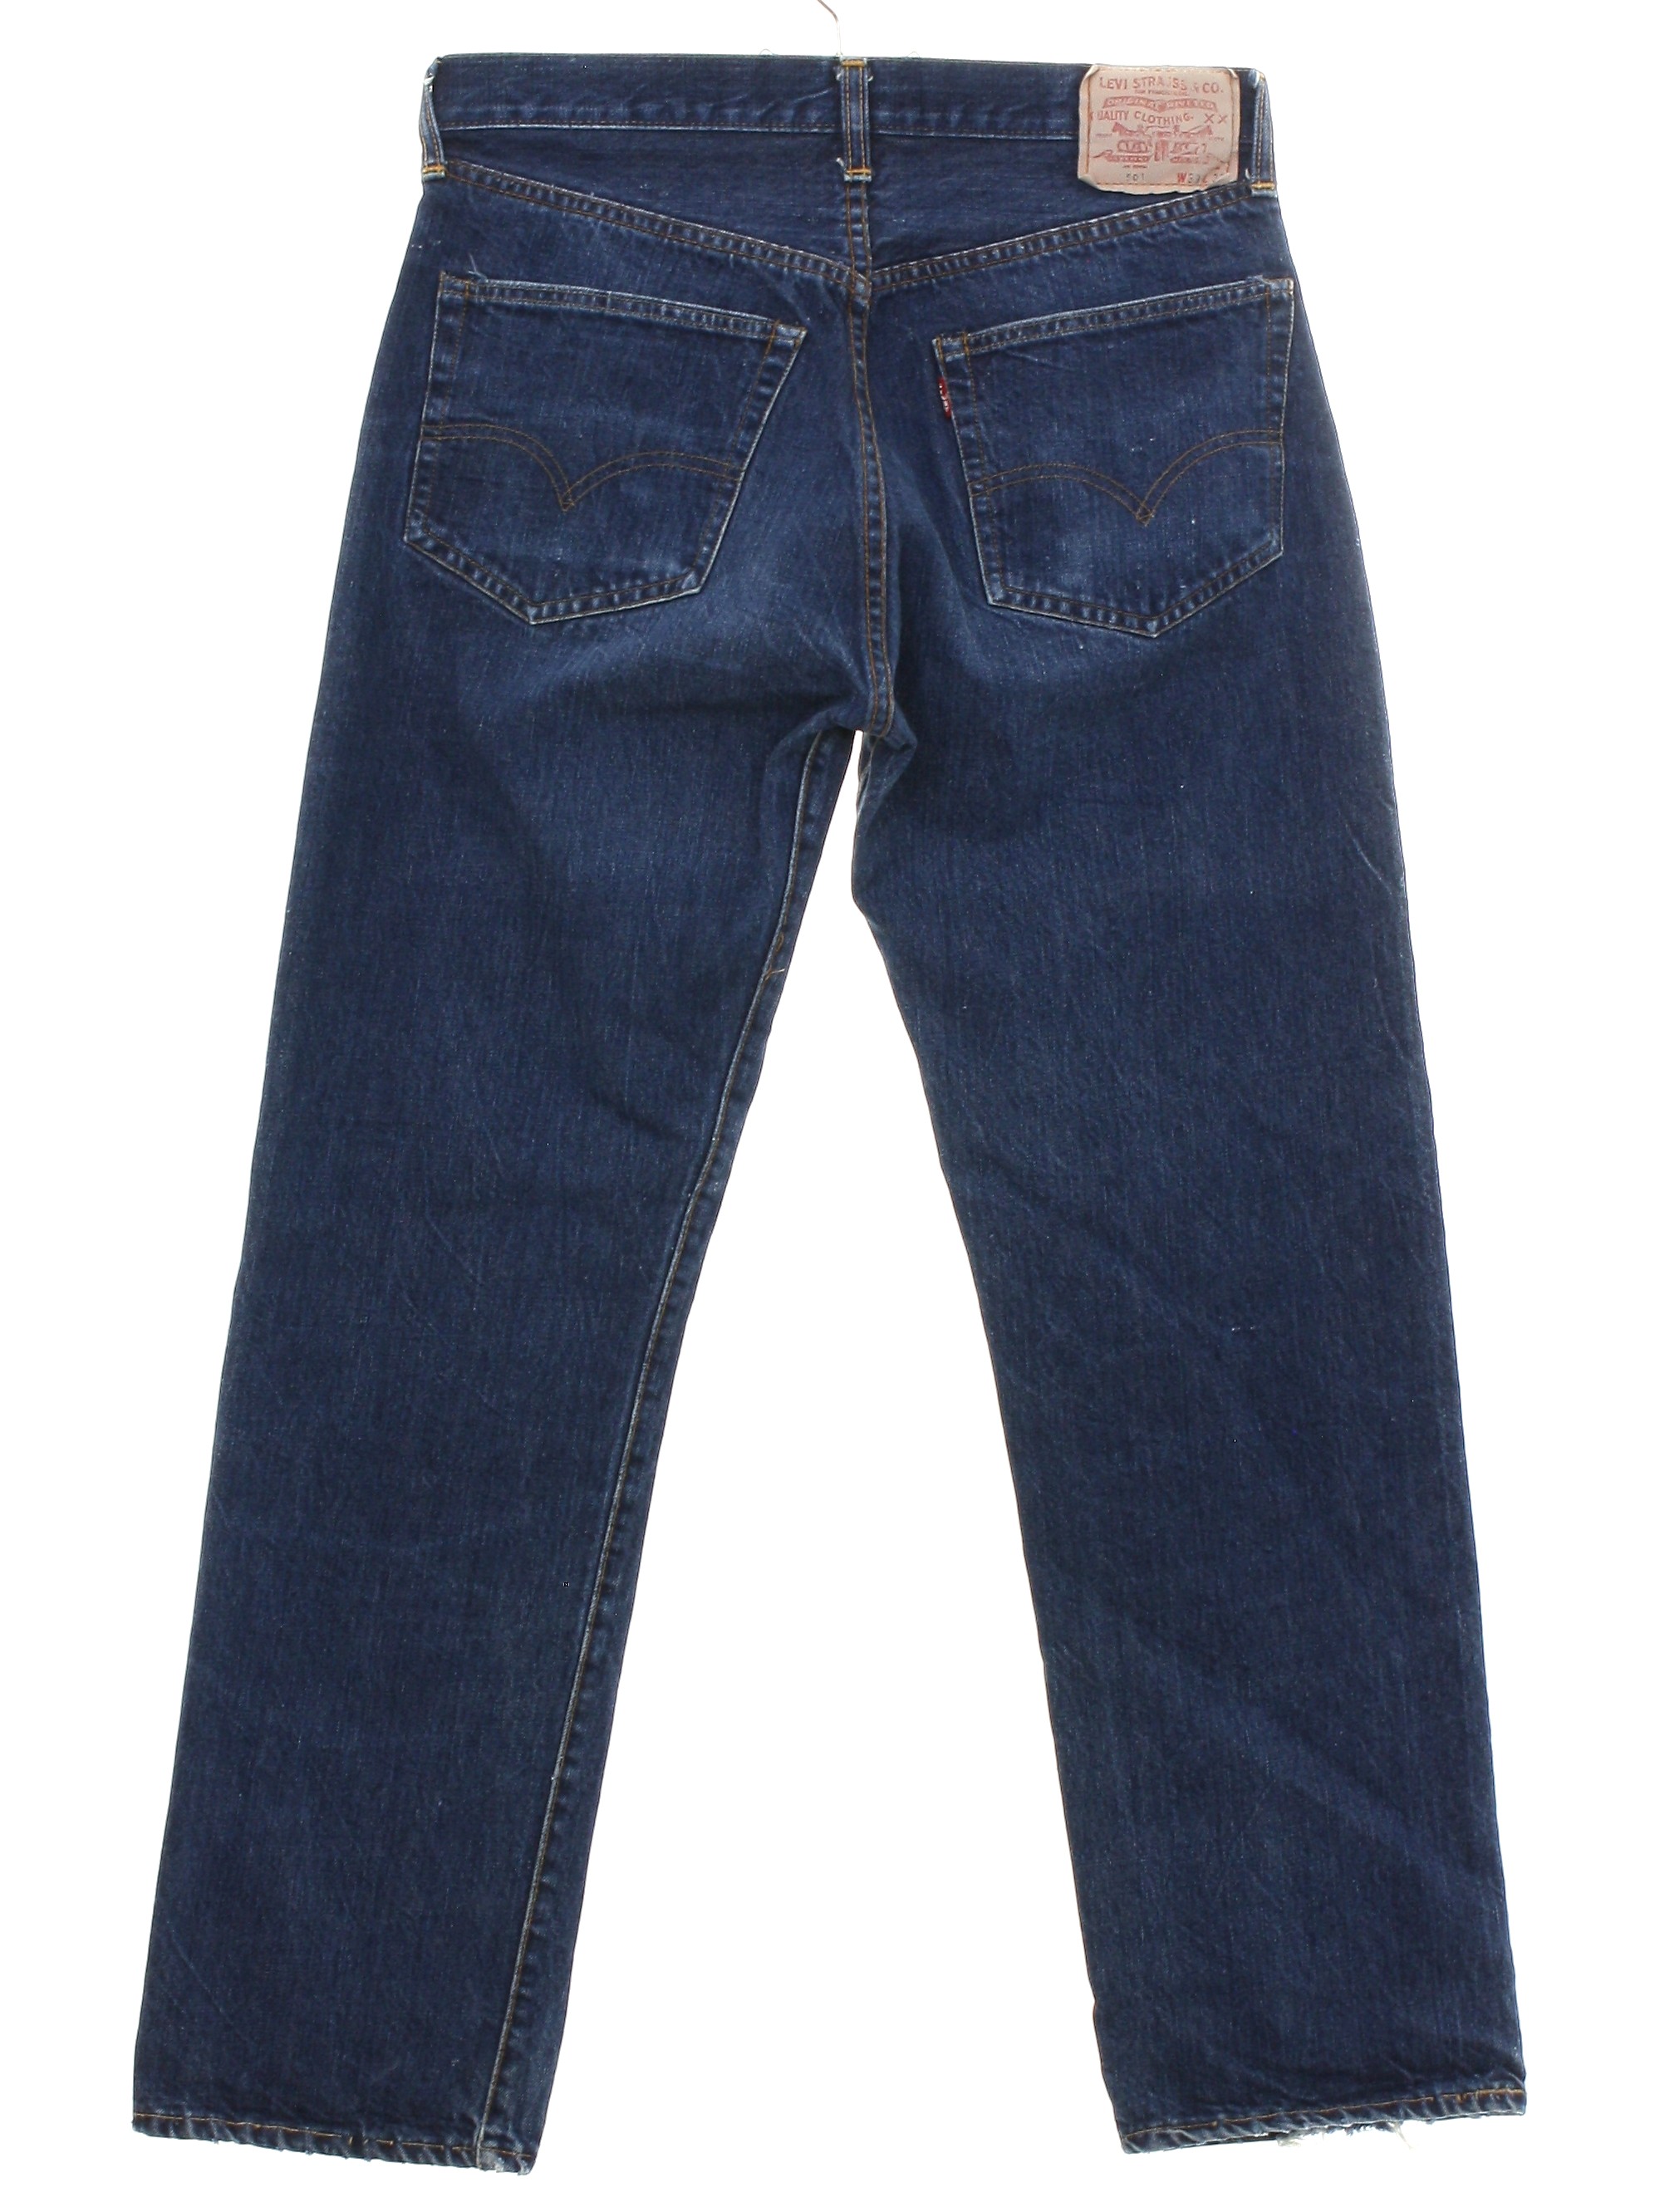 Levis 501s Sixties Vintage Pants: 60s -Levis 501s- Mens dark blue